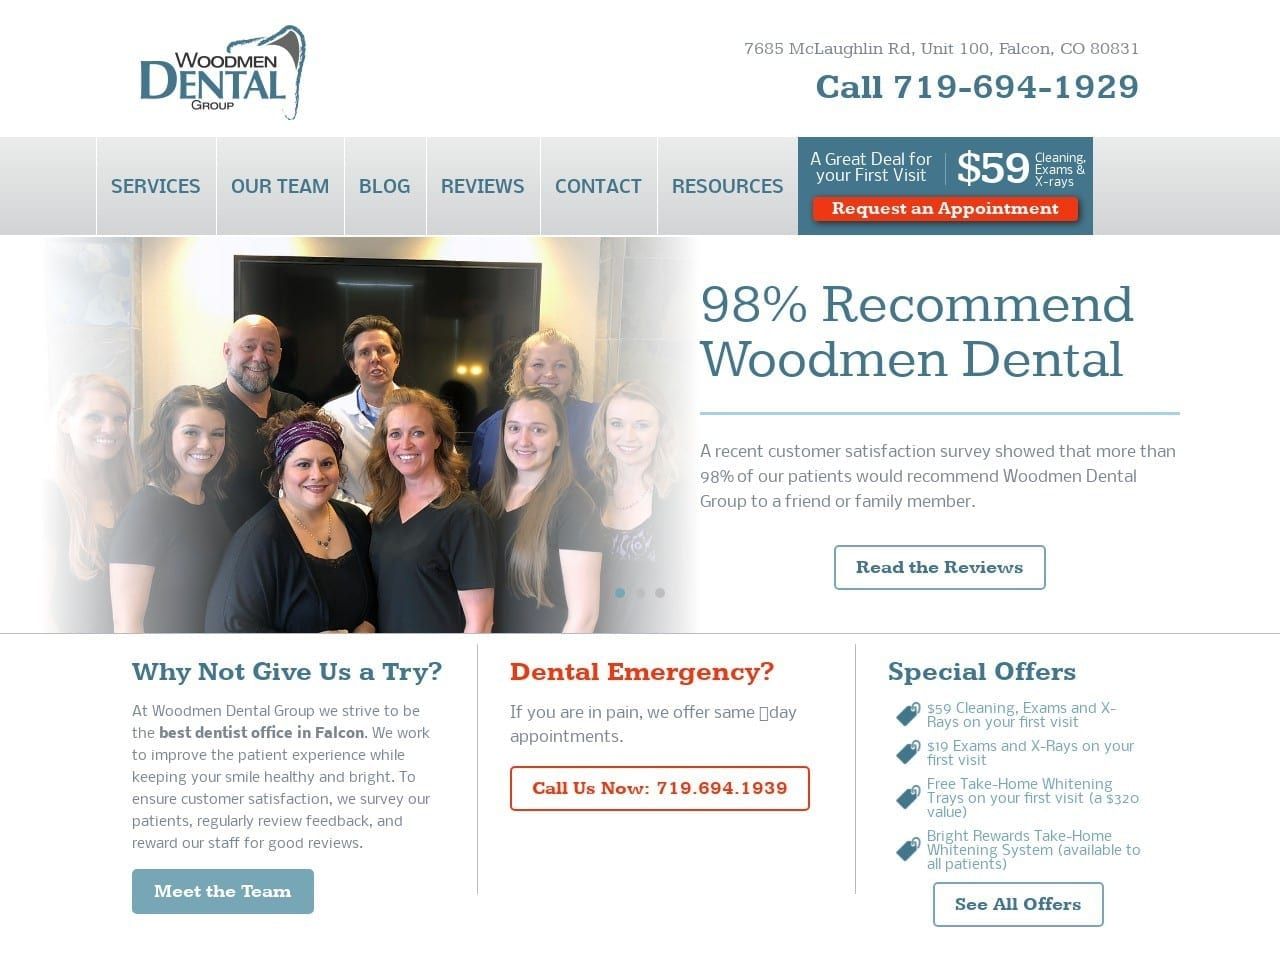 Woodmen Dental Group Website Screenshot from woodmendentalgroup.com